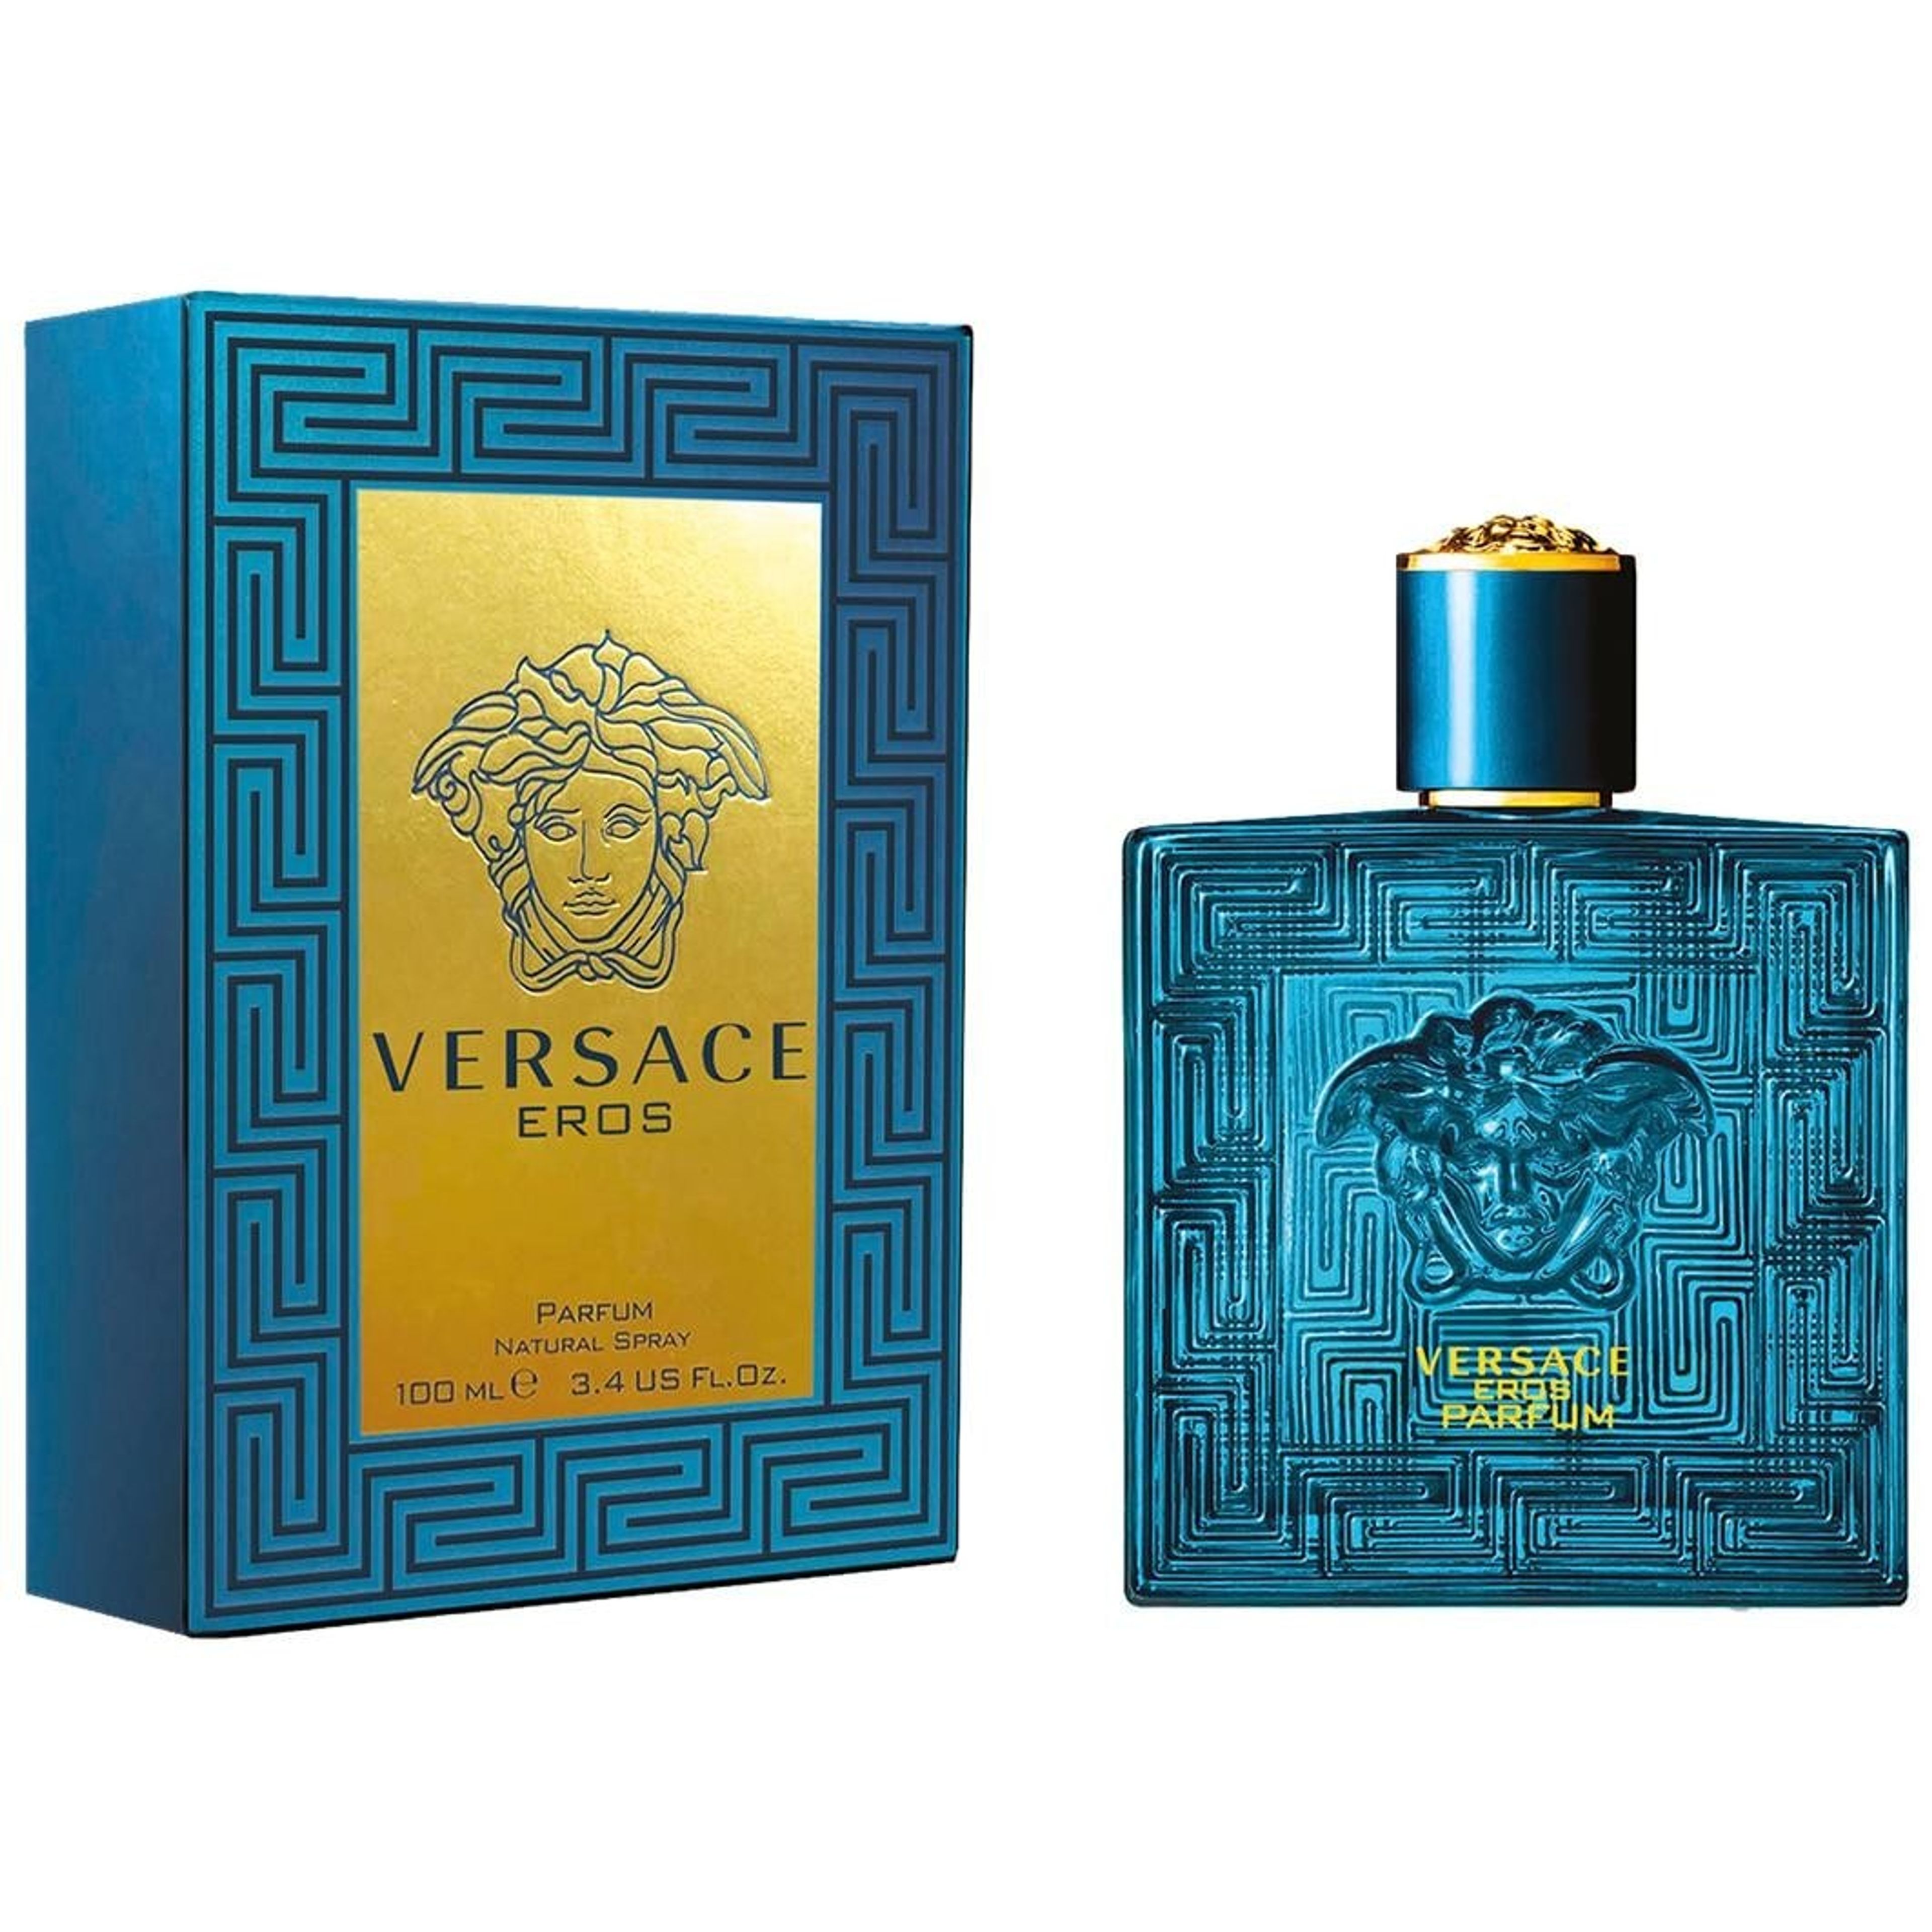 Versace Eros Parfum 1